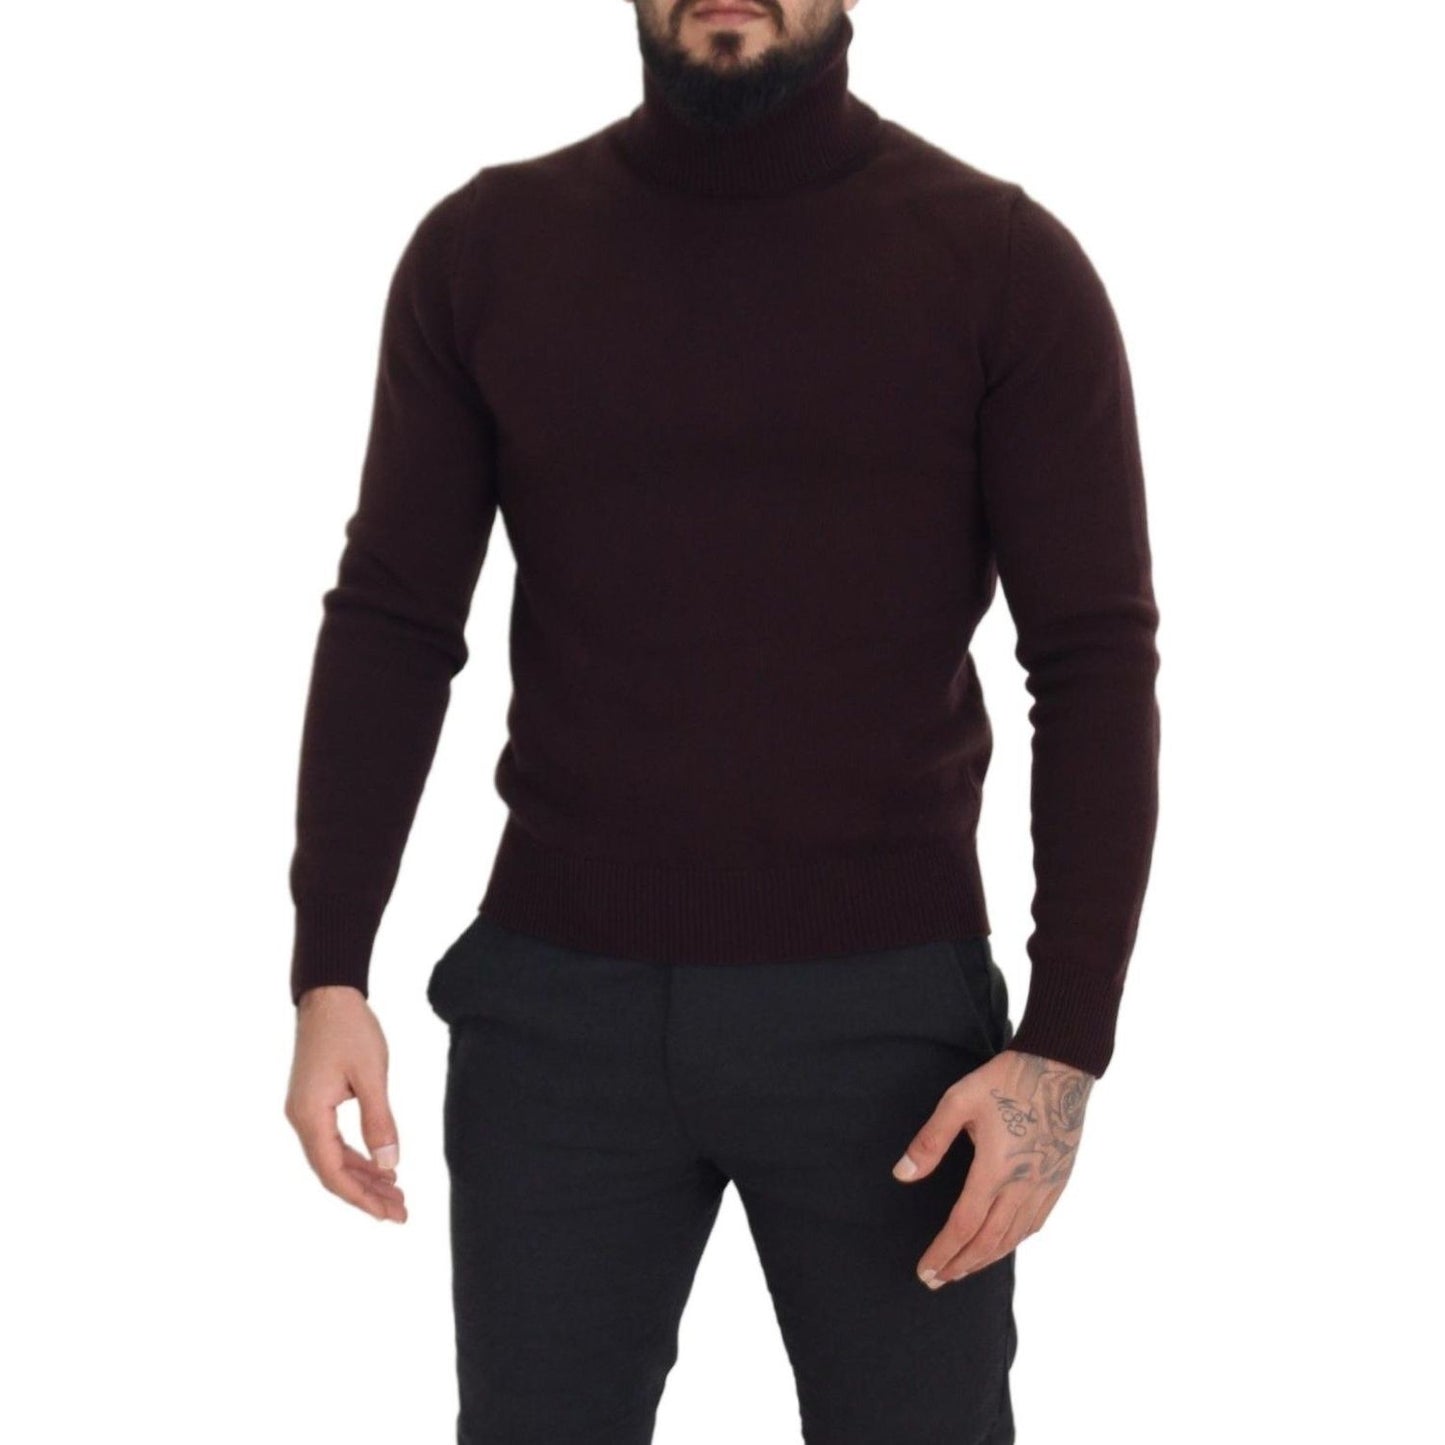 Dolce & Gabbana Elegant Turtleneck Wool Pullover Sweater brown-wool-turtle-neck-pullover-sweater